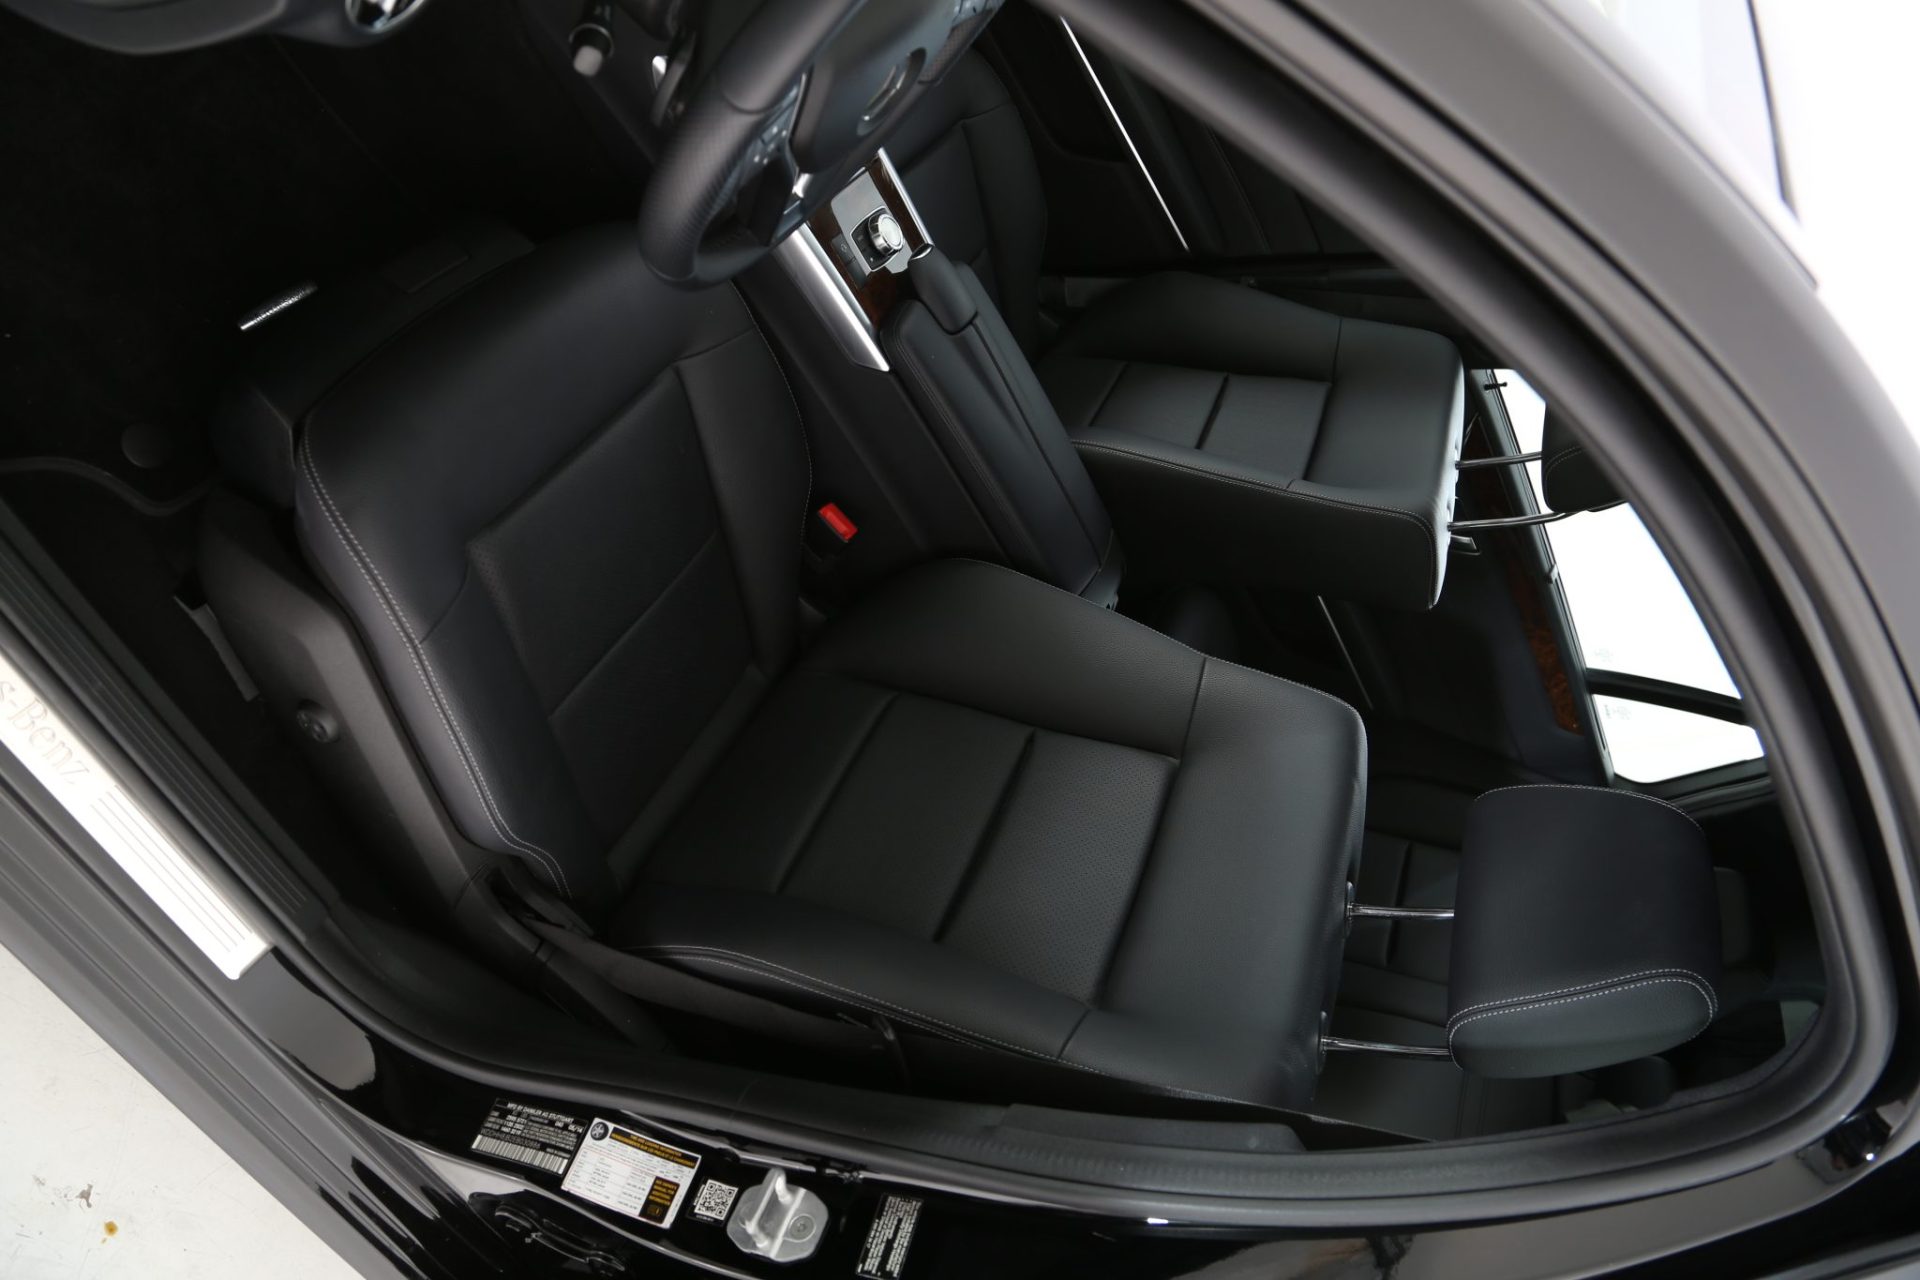 Mercedes Benz S-Class Hearse Limousine - Interior Photo #4